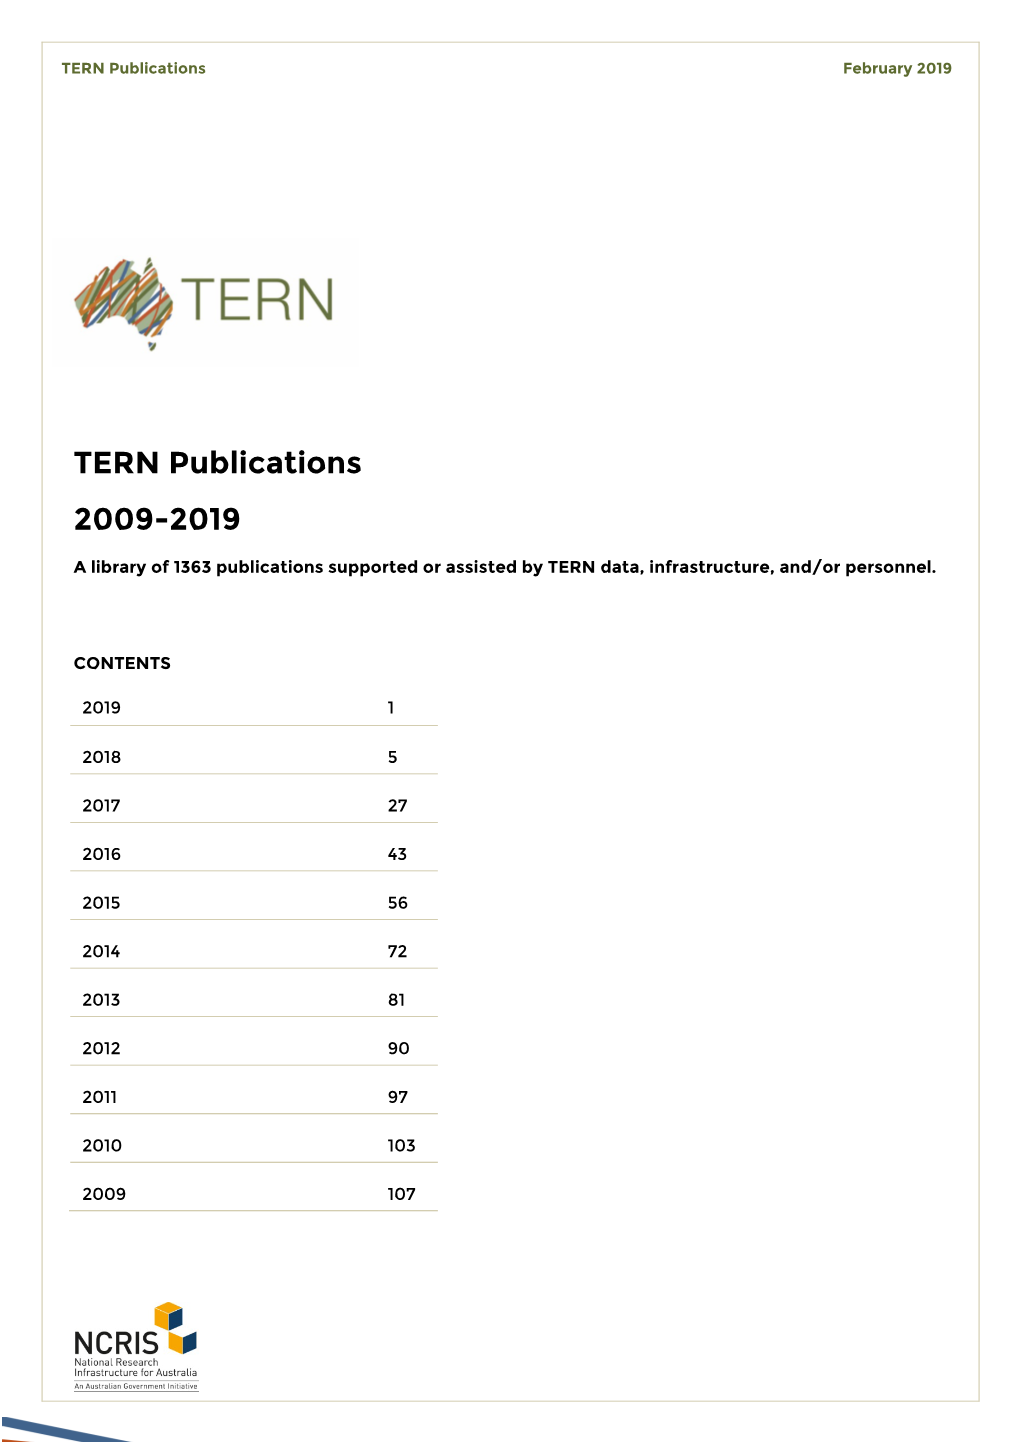 TERN Publications 2009-2019